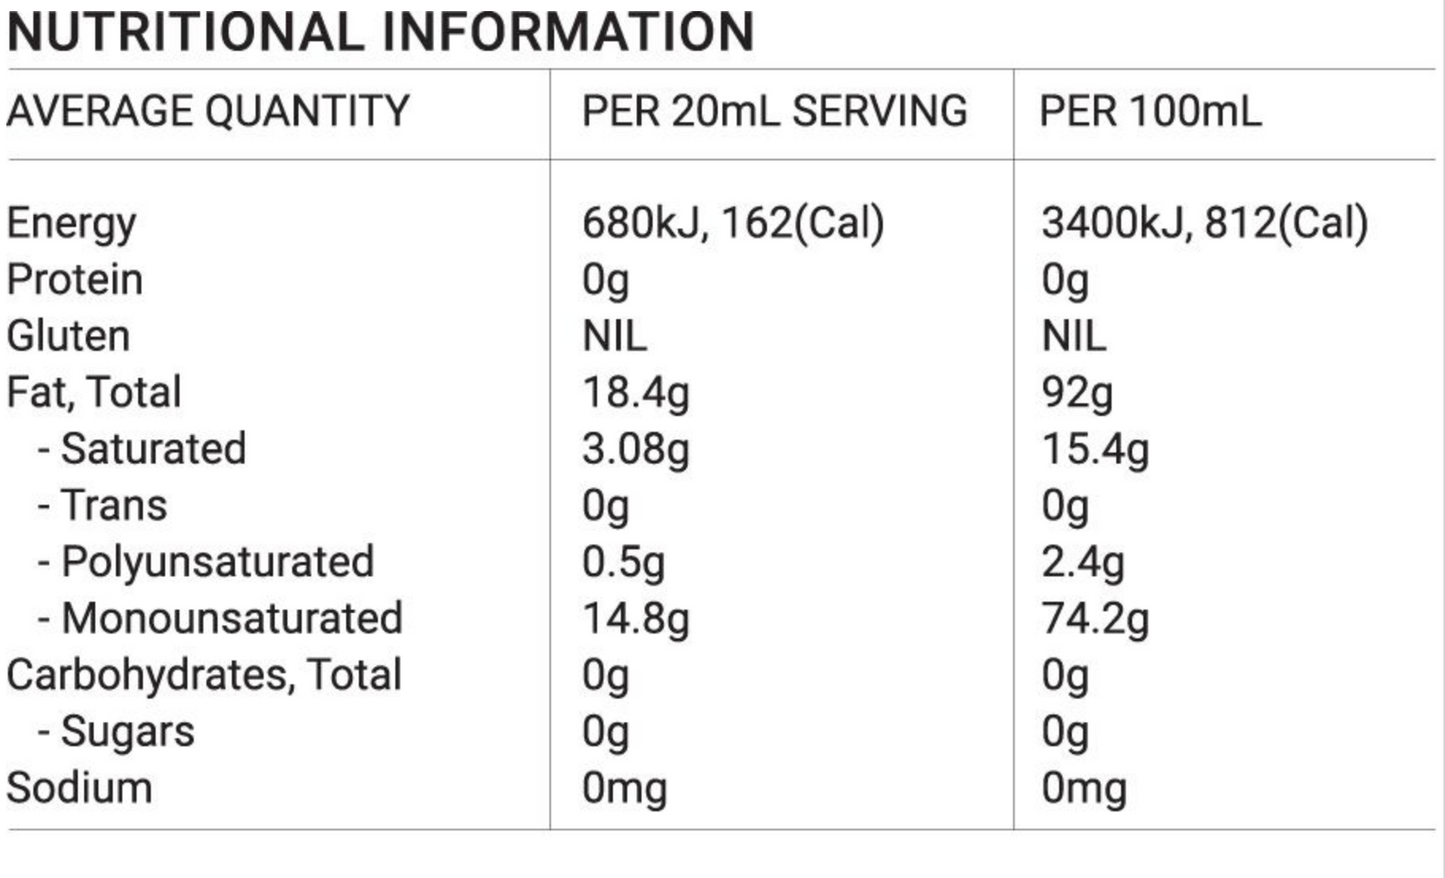 Melrose Organic Australian Macadamia Oil 250ml, Expeller Pressed